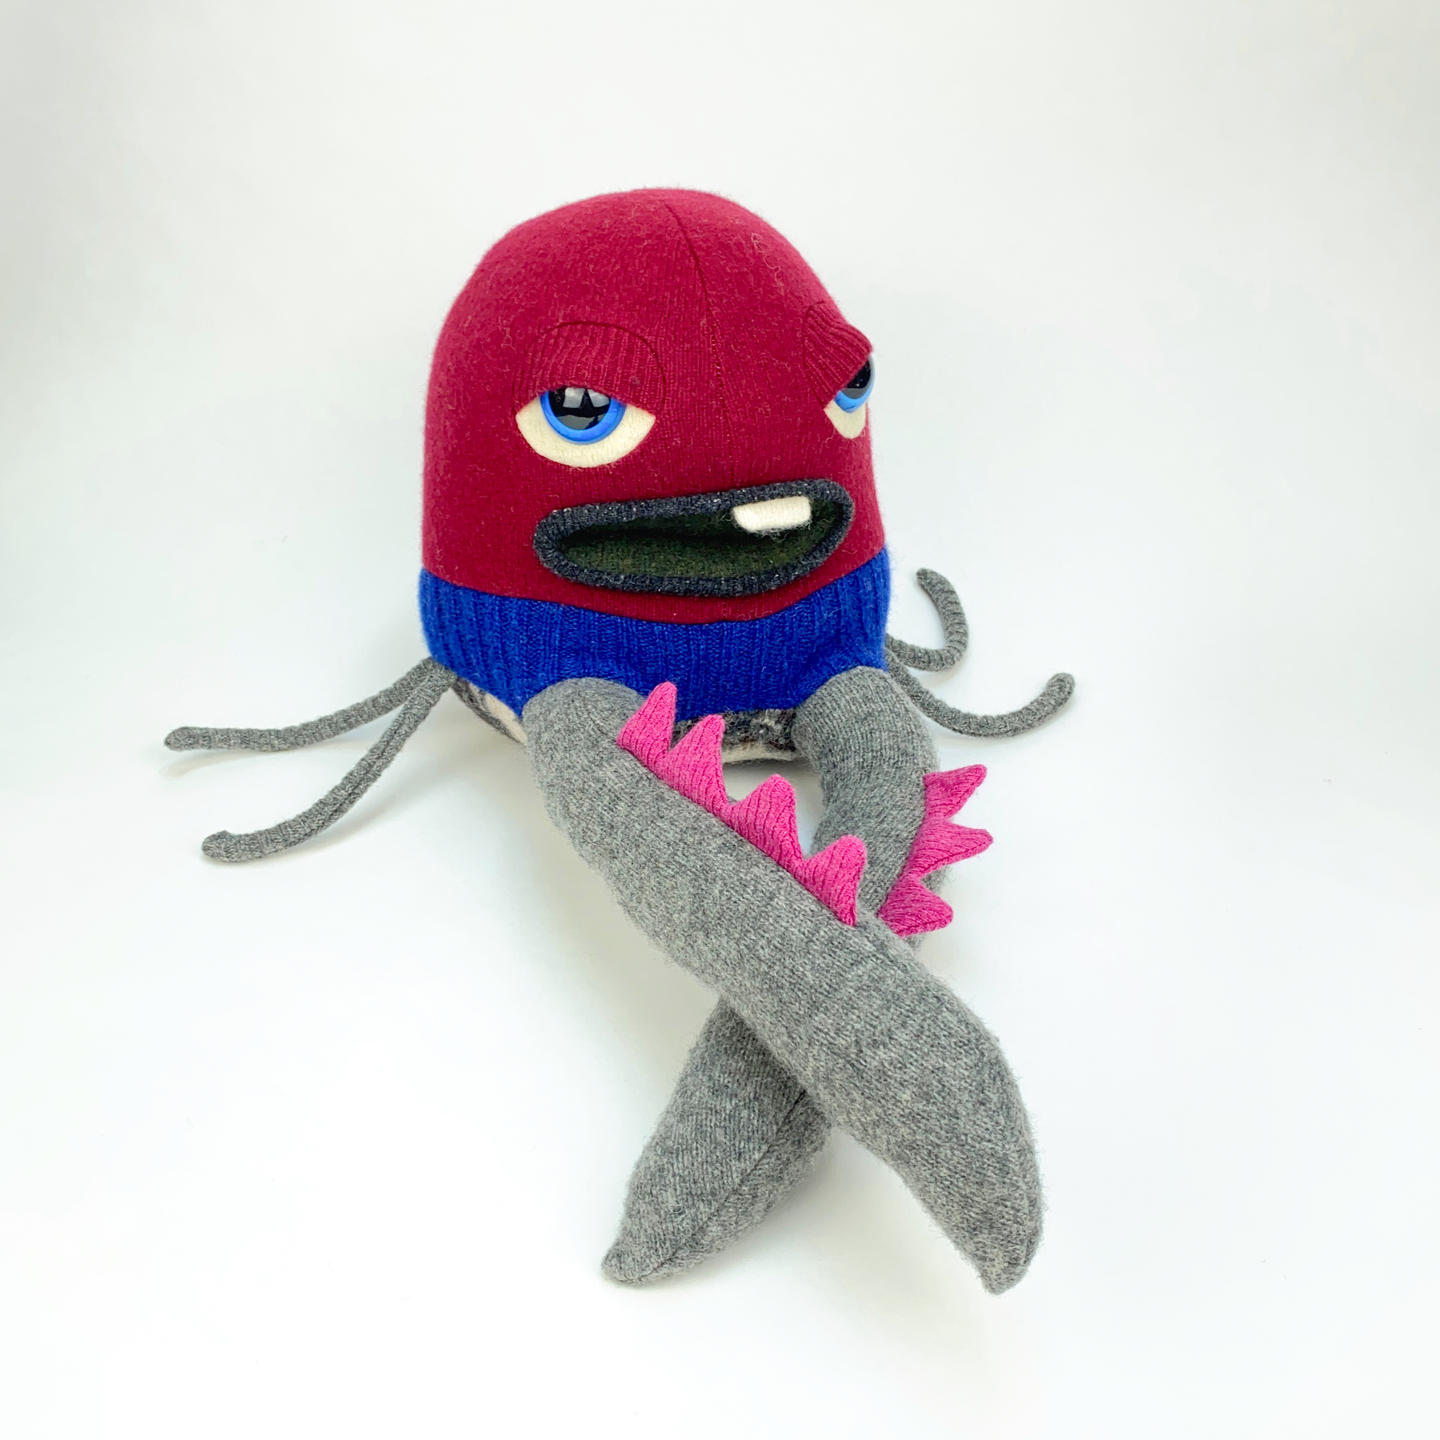 Cruncher the plush octopus style my friend monster™ wool sweater stuffy